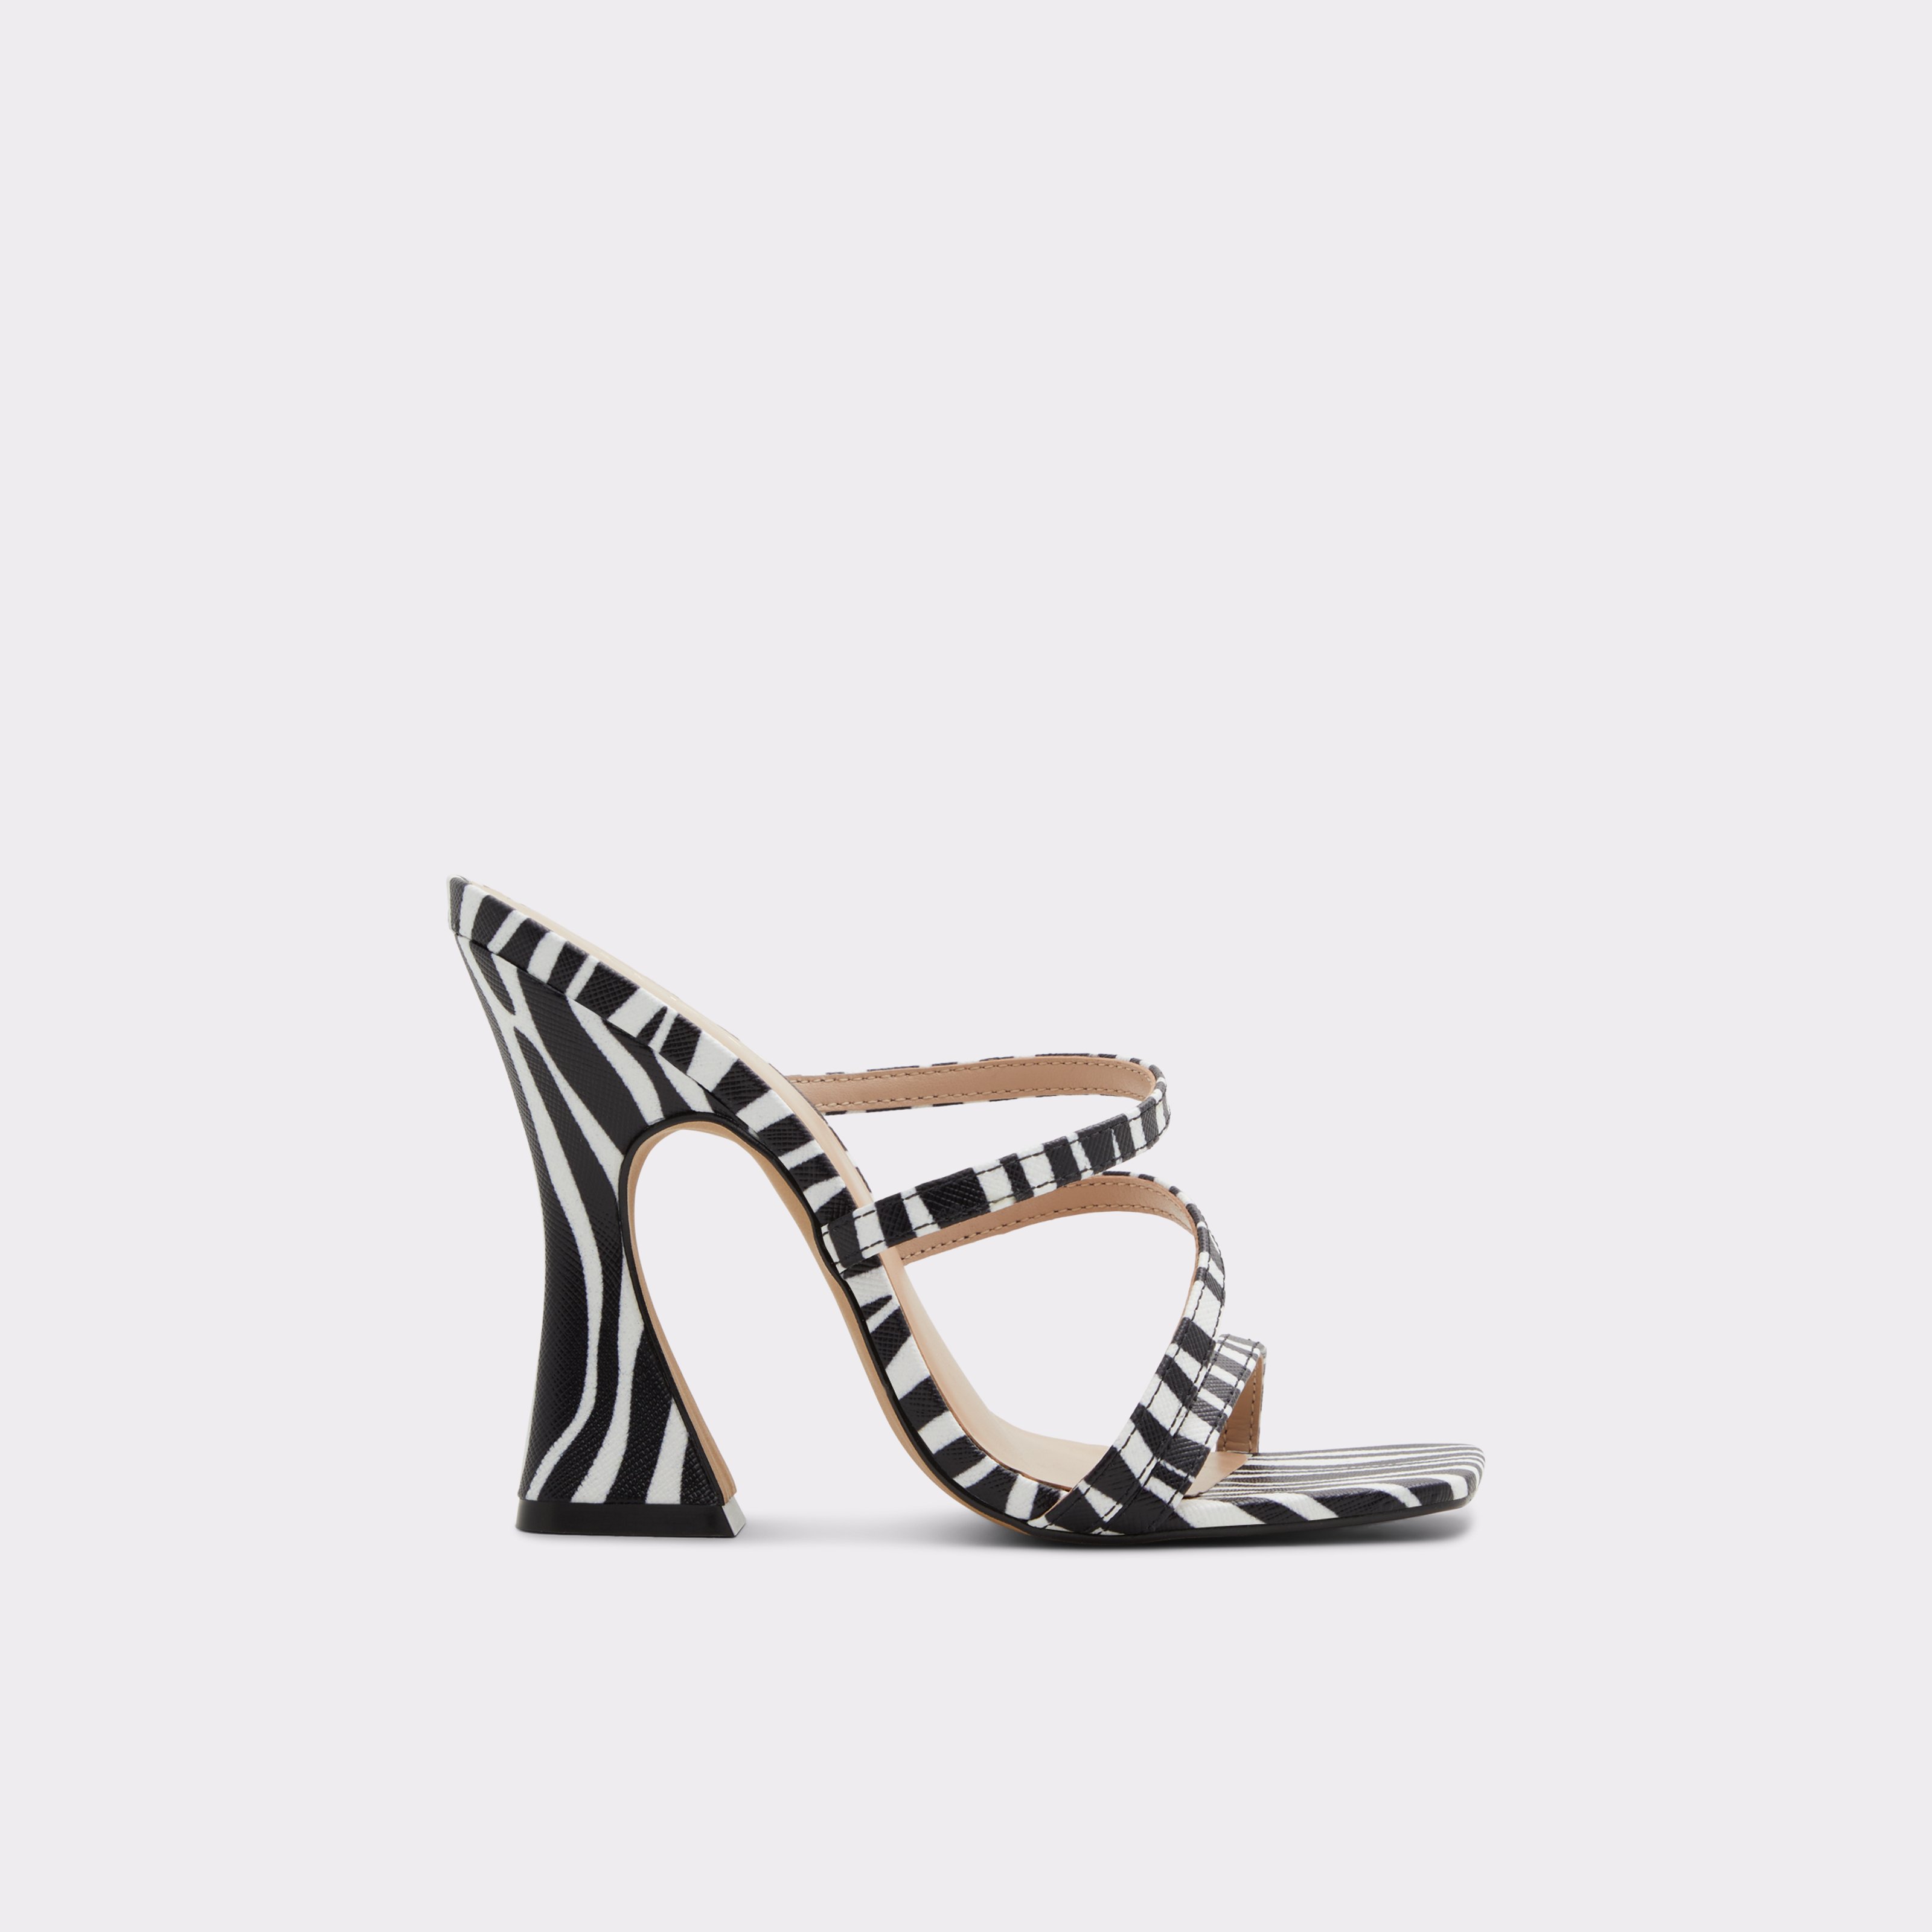 Hugar Black-White Women's Mule Shoes | ALDO US